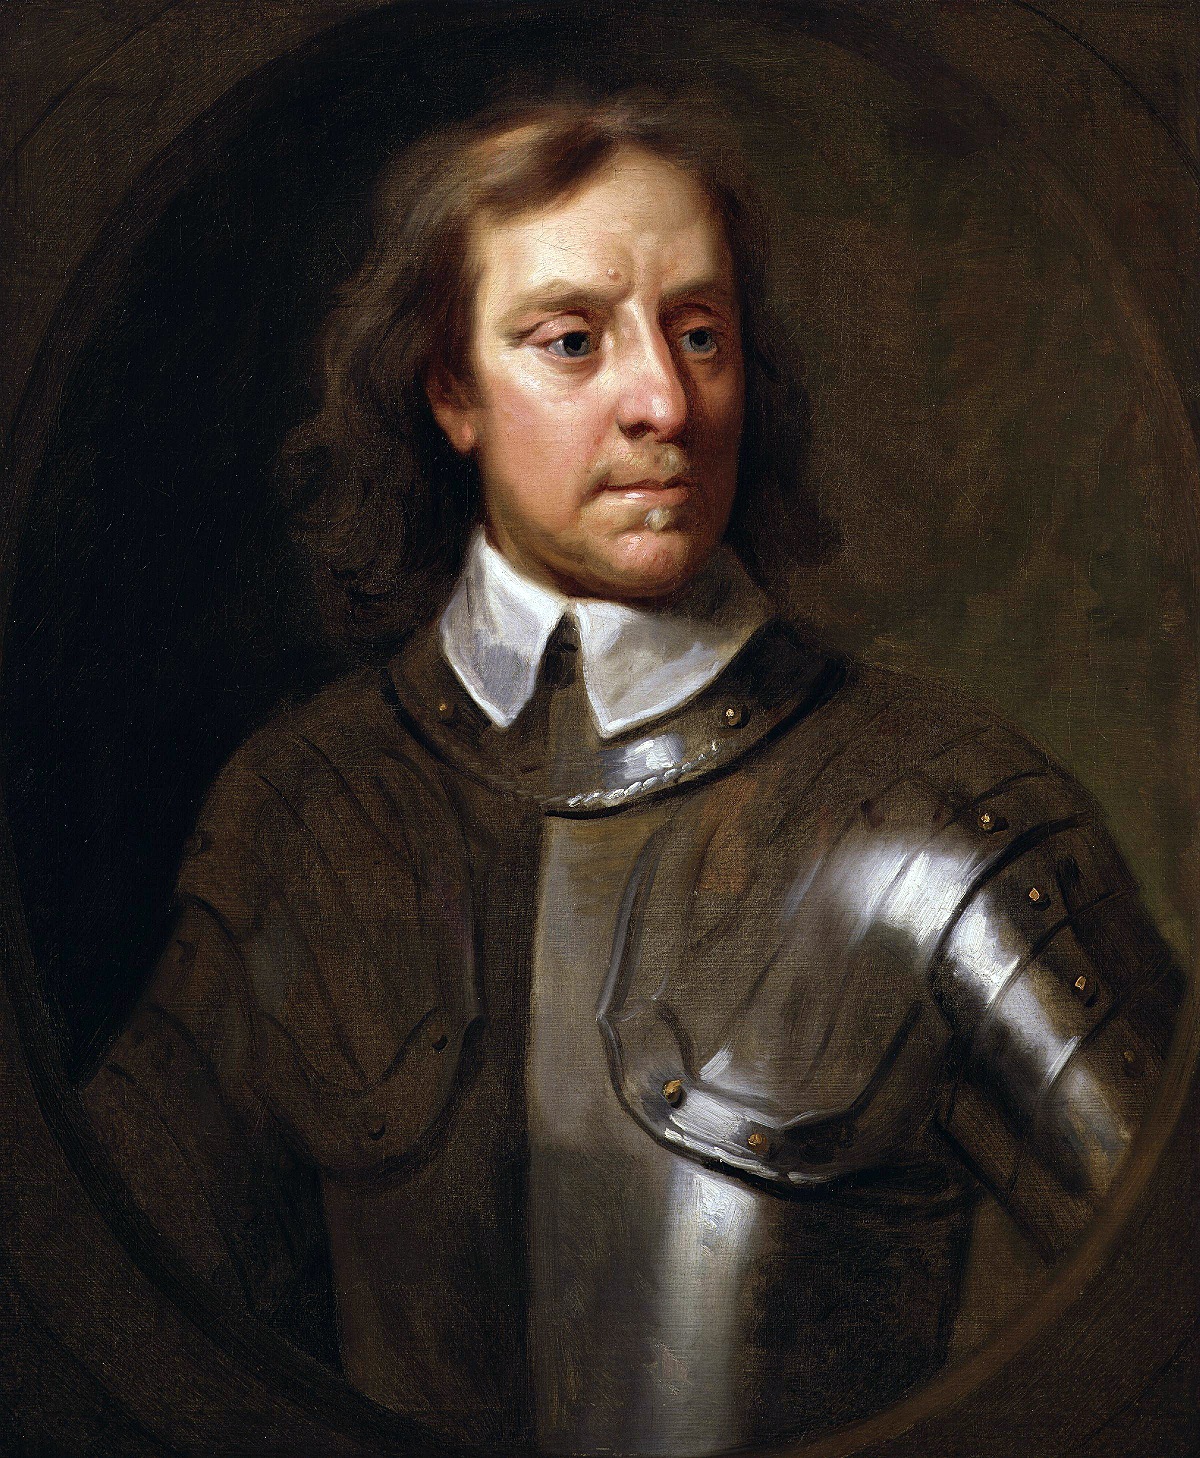 Oliver Cromwell Image public domain